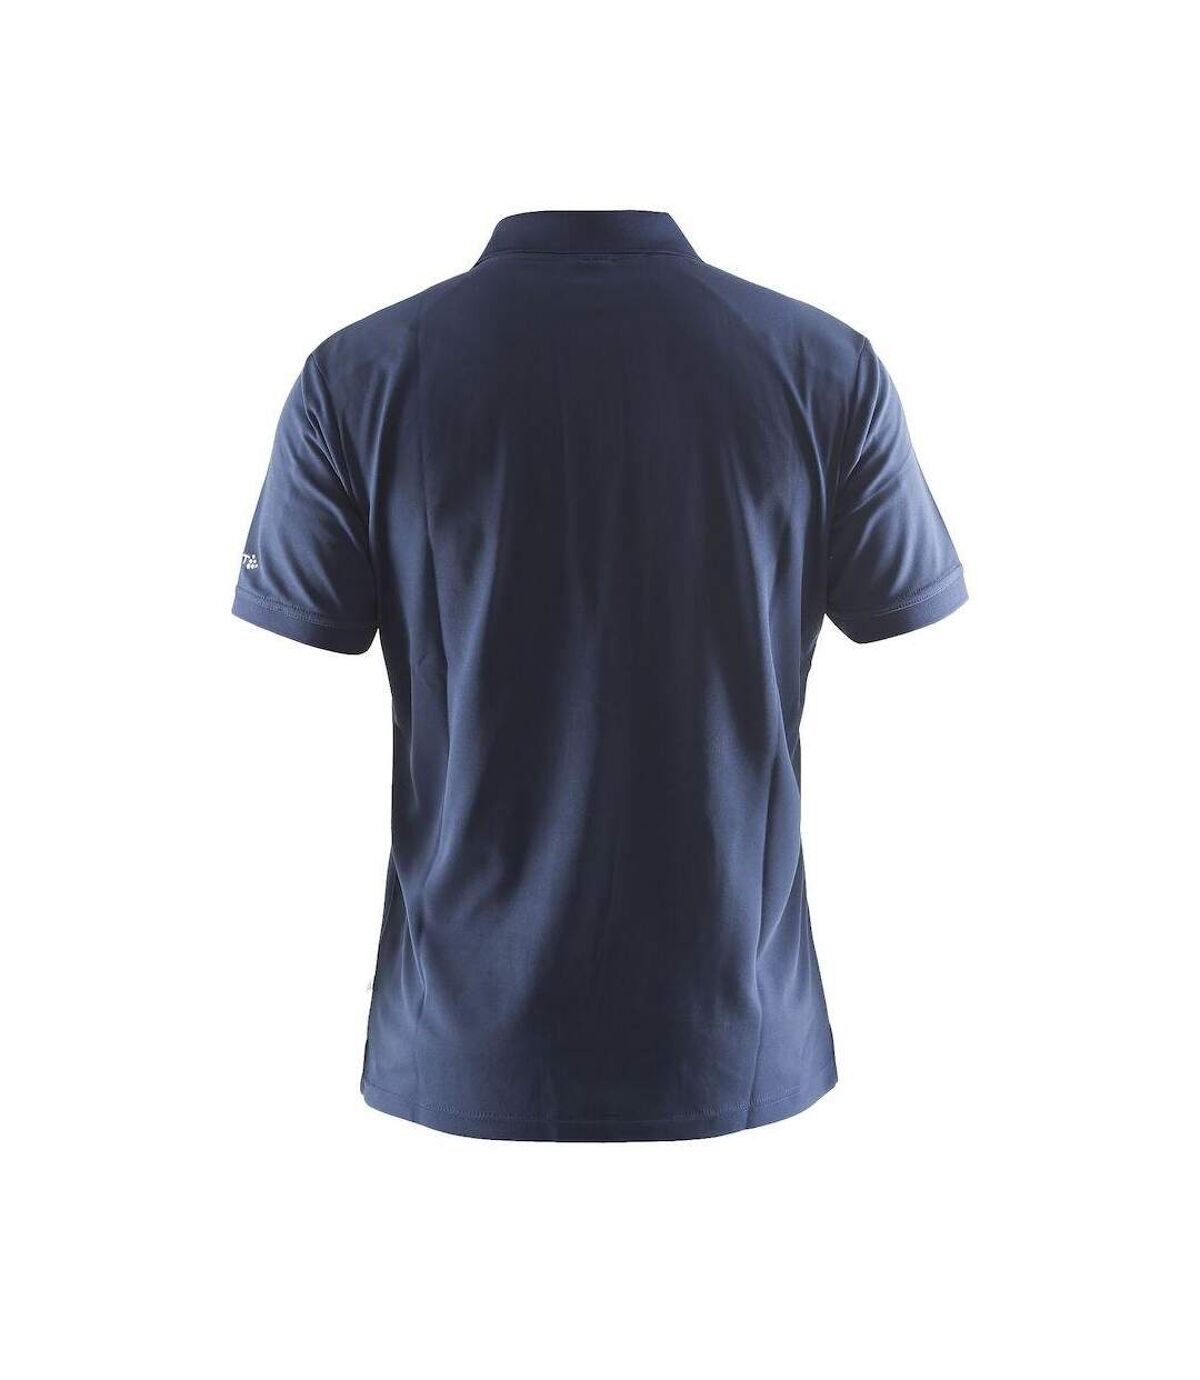 Craft Mens Classic Pique Short Sleeve Polo Shirt (Red)